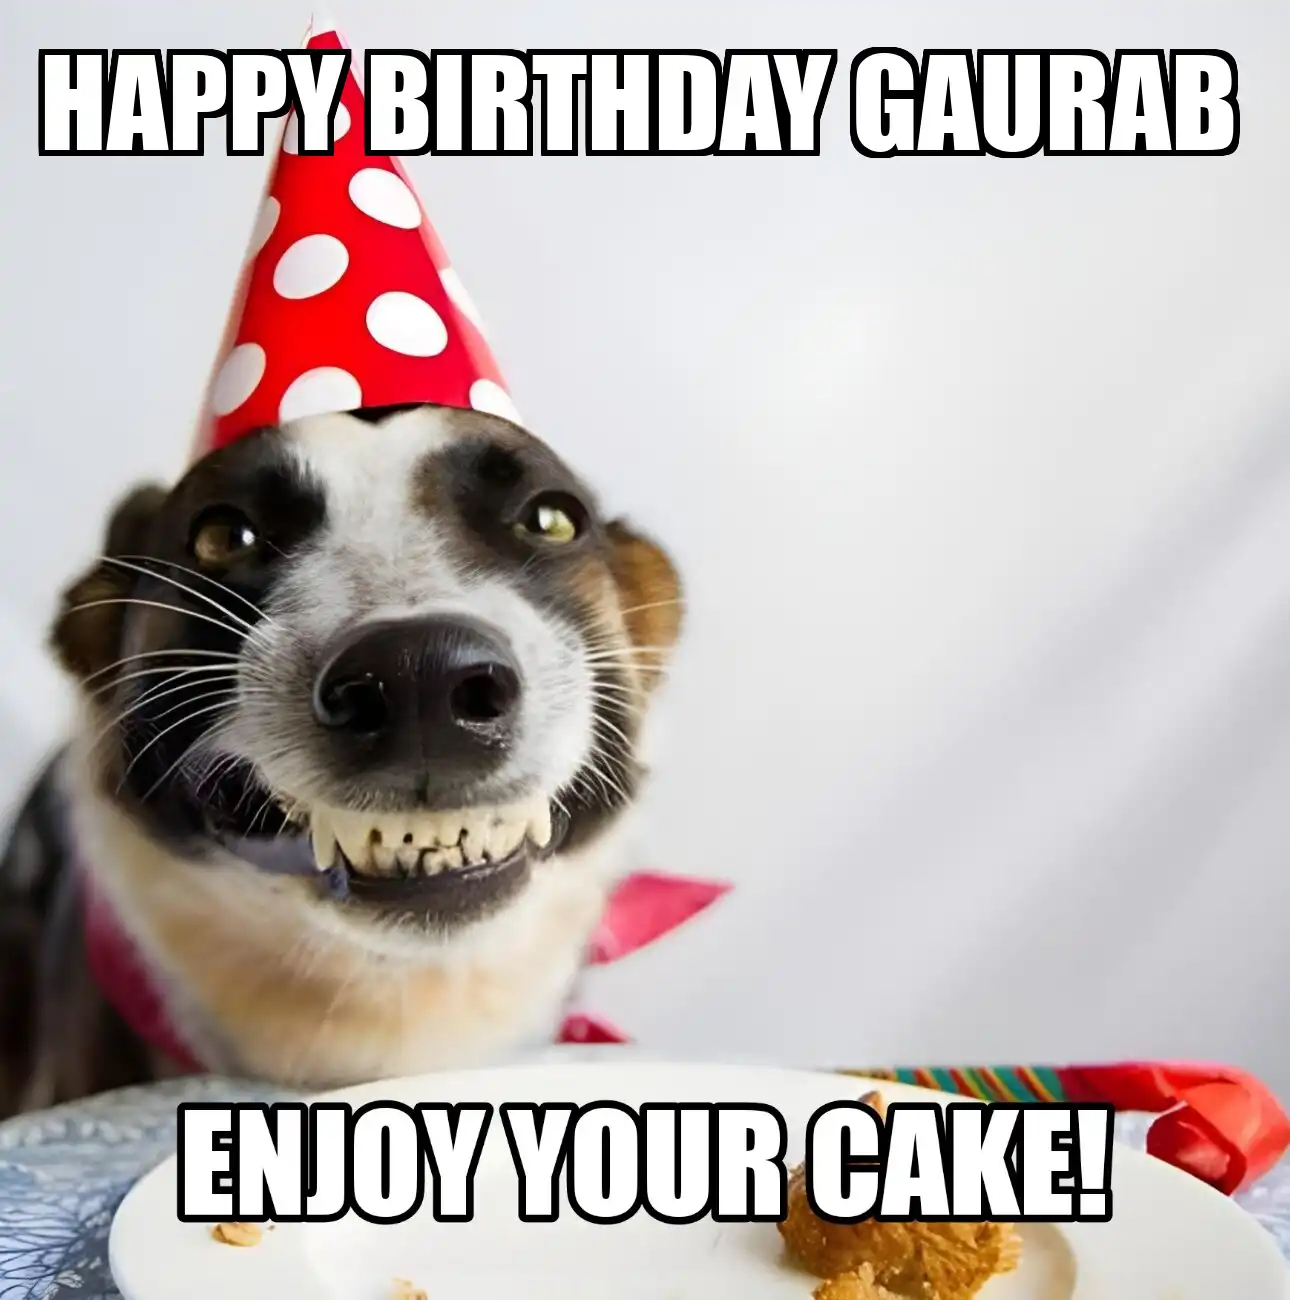 Happy Birthday Gaurab Enjoy Your Cake Dog Meme